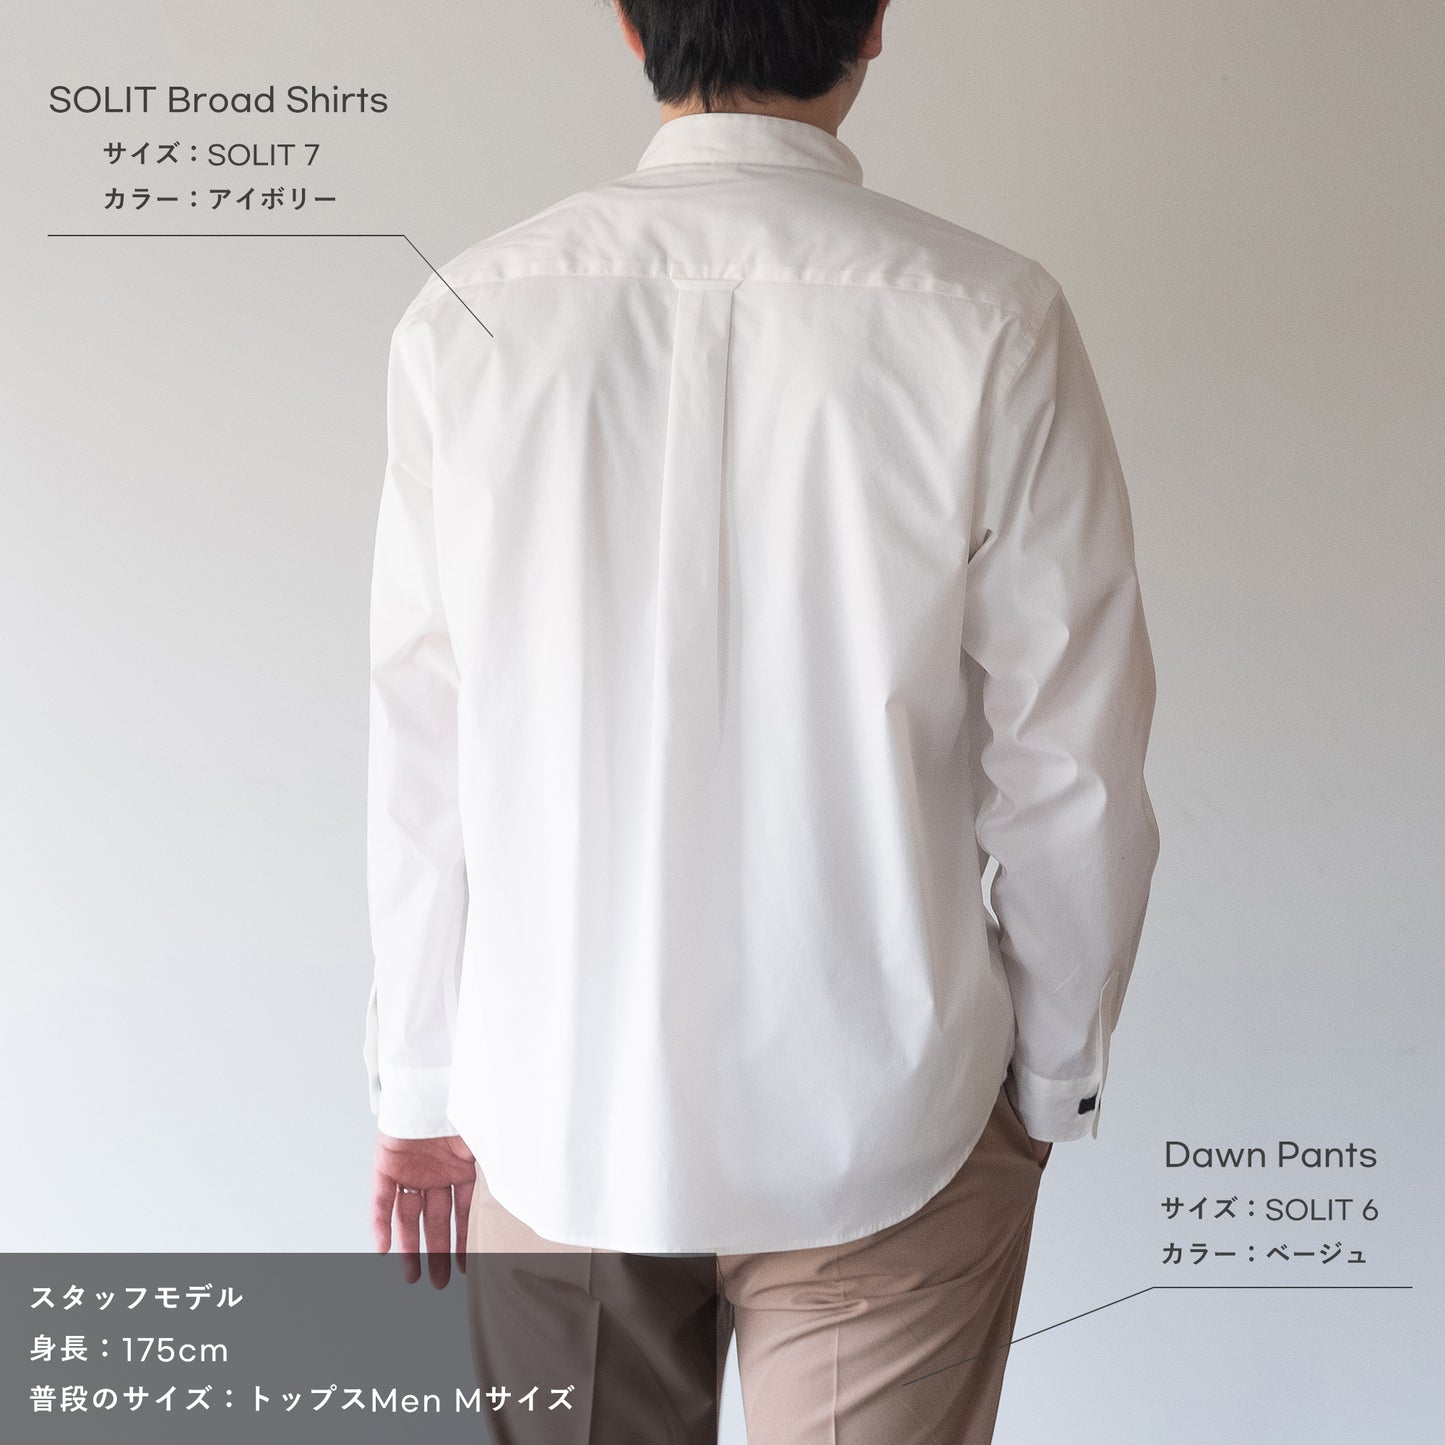 SOLIT Broad Shirts